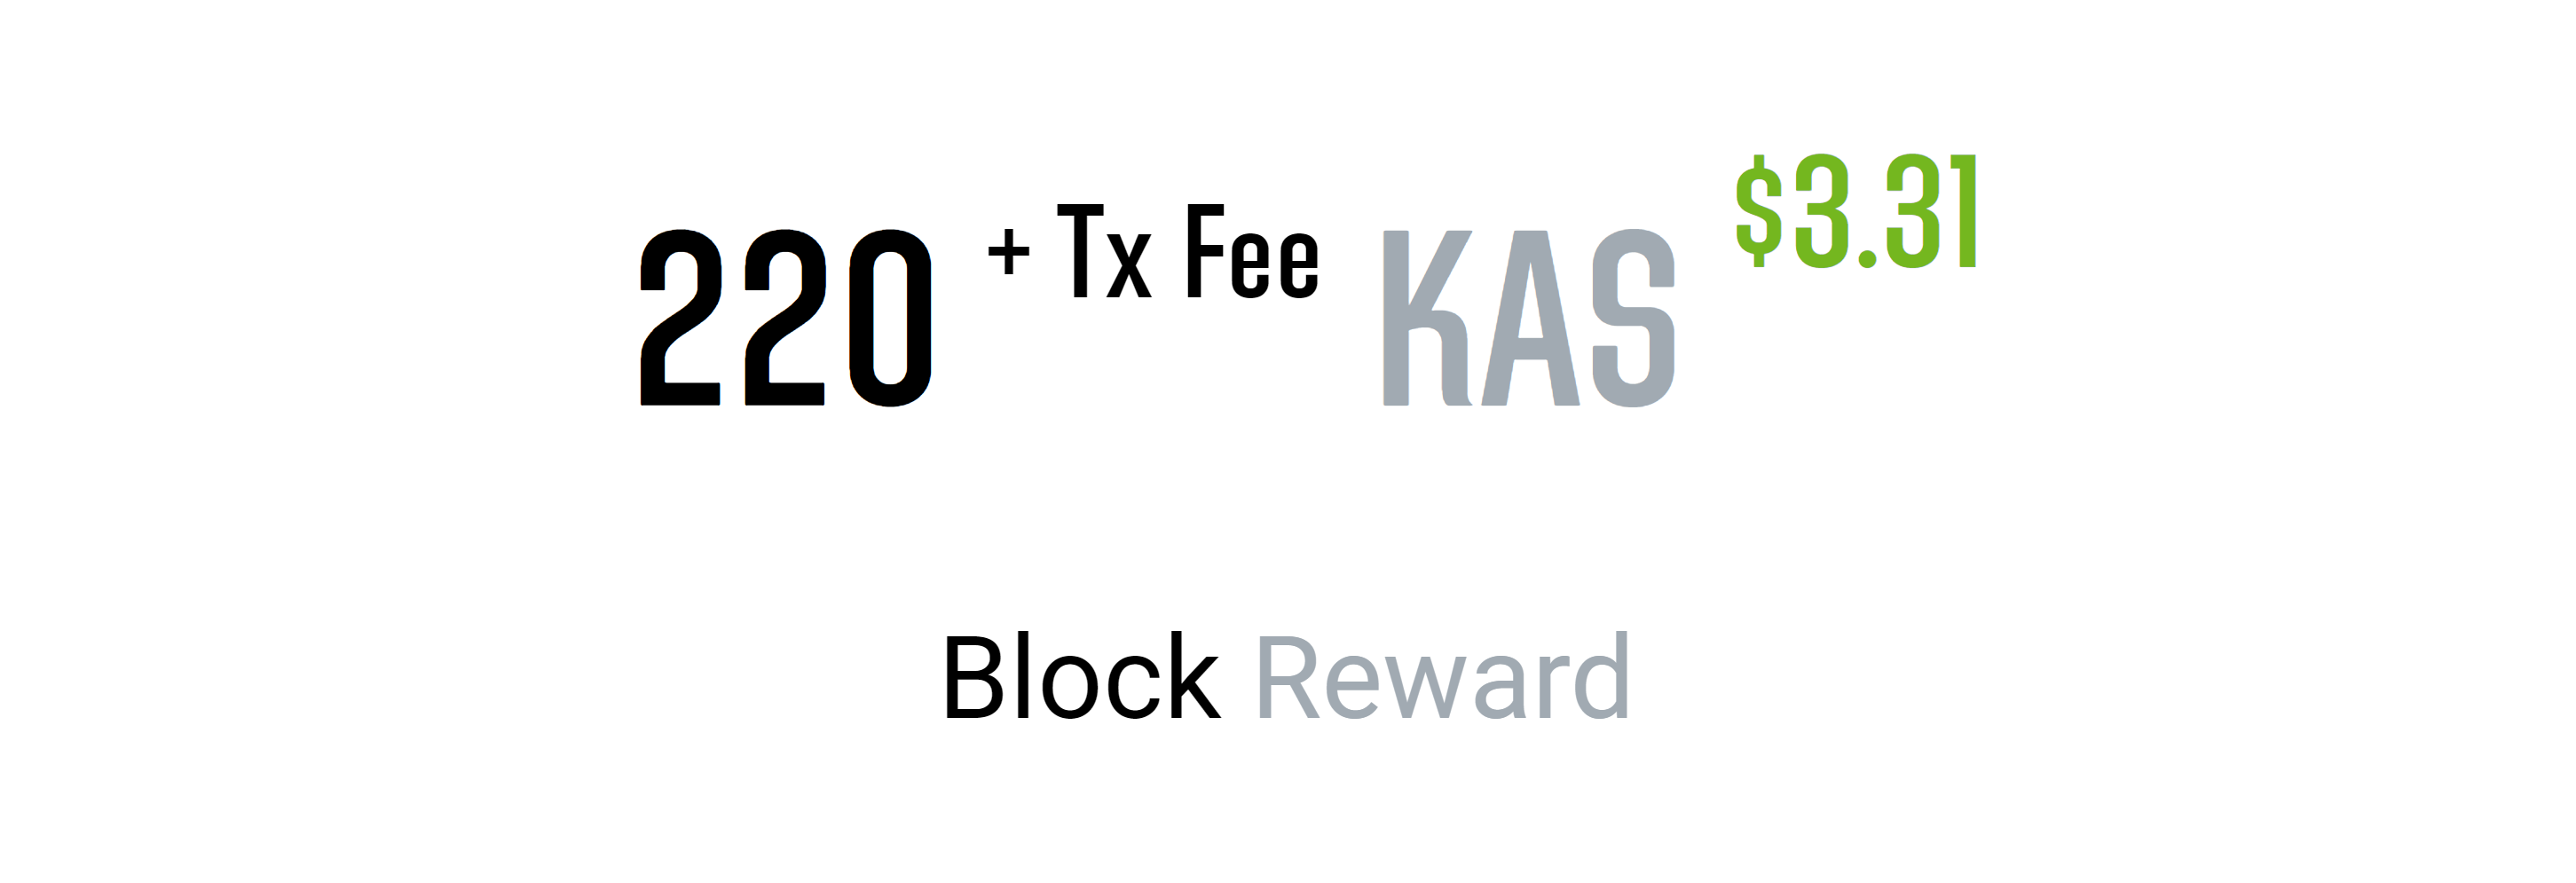 kaspa_rewards_reduction